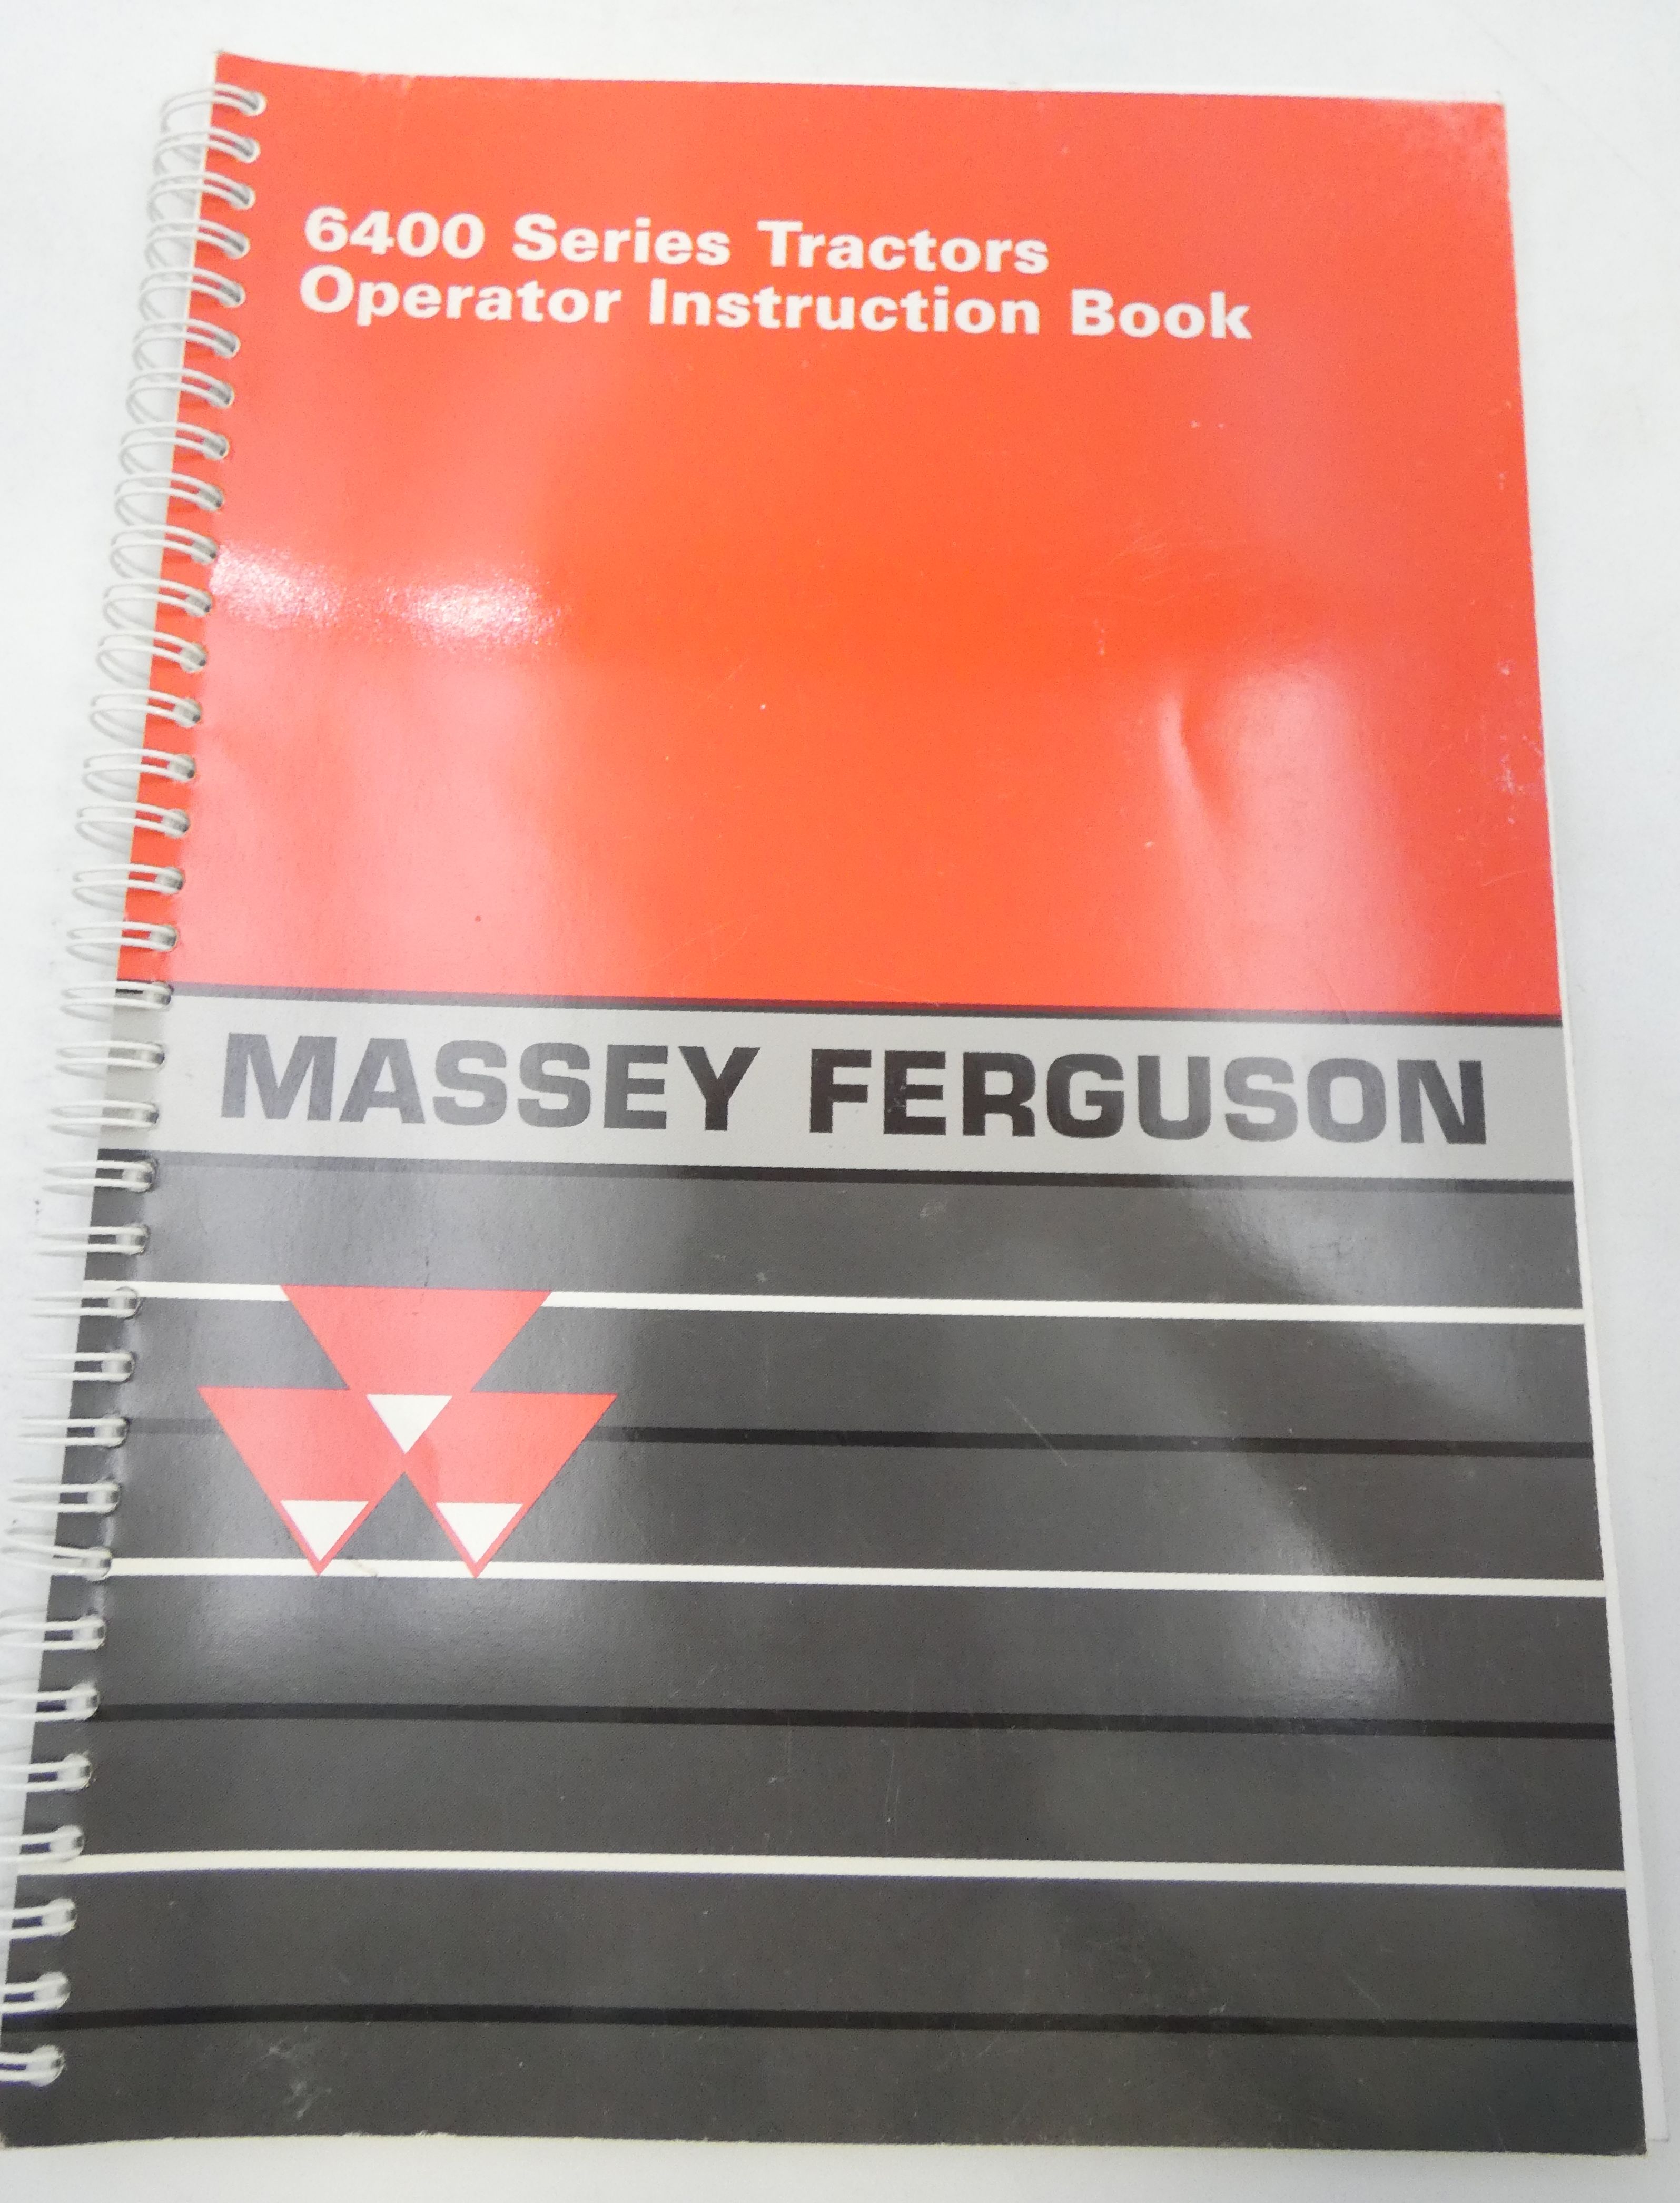 Massey-Ferguson 6400 series tractors operator instruction book